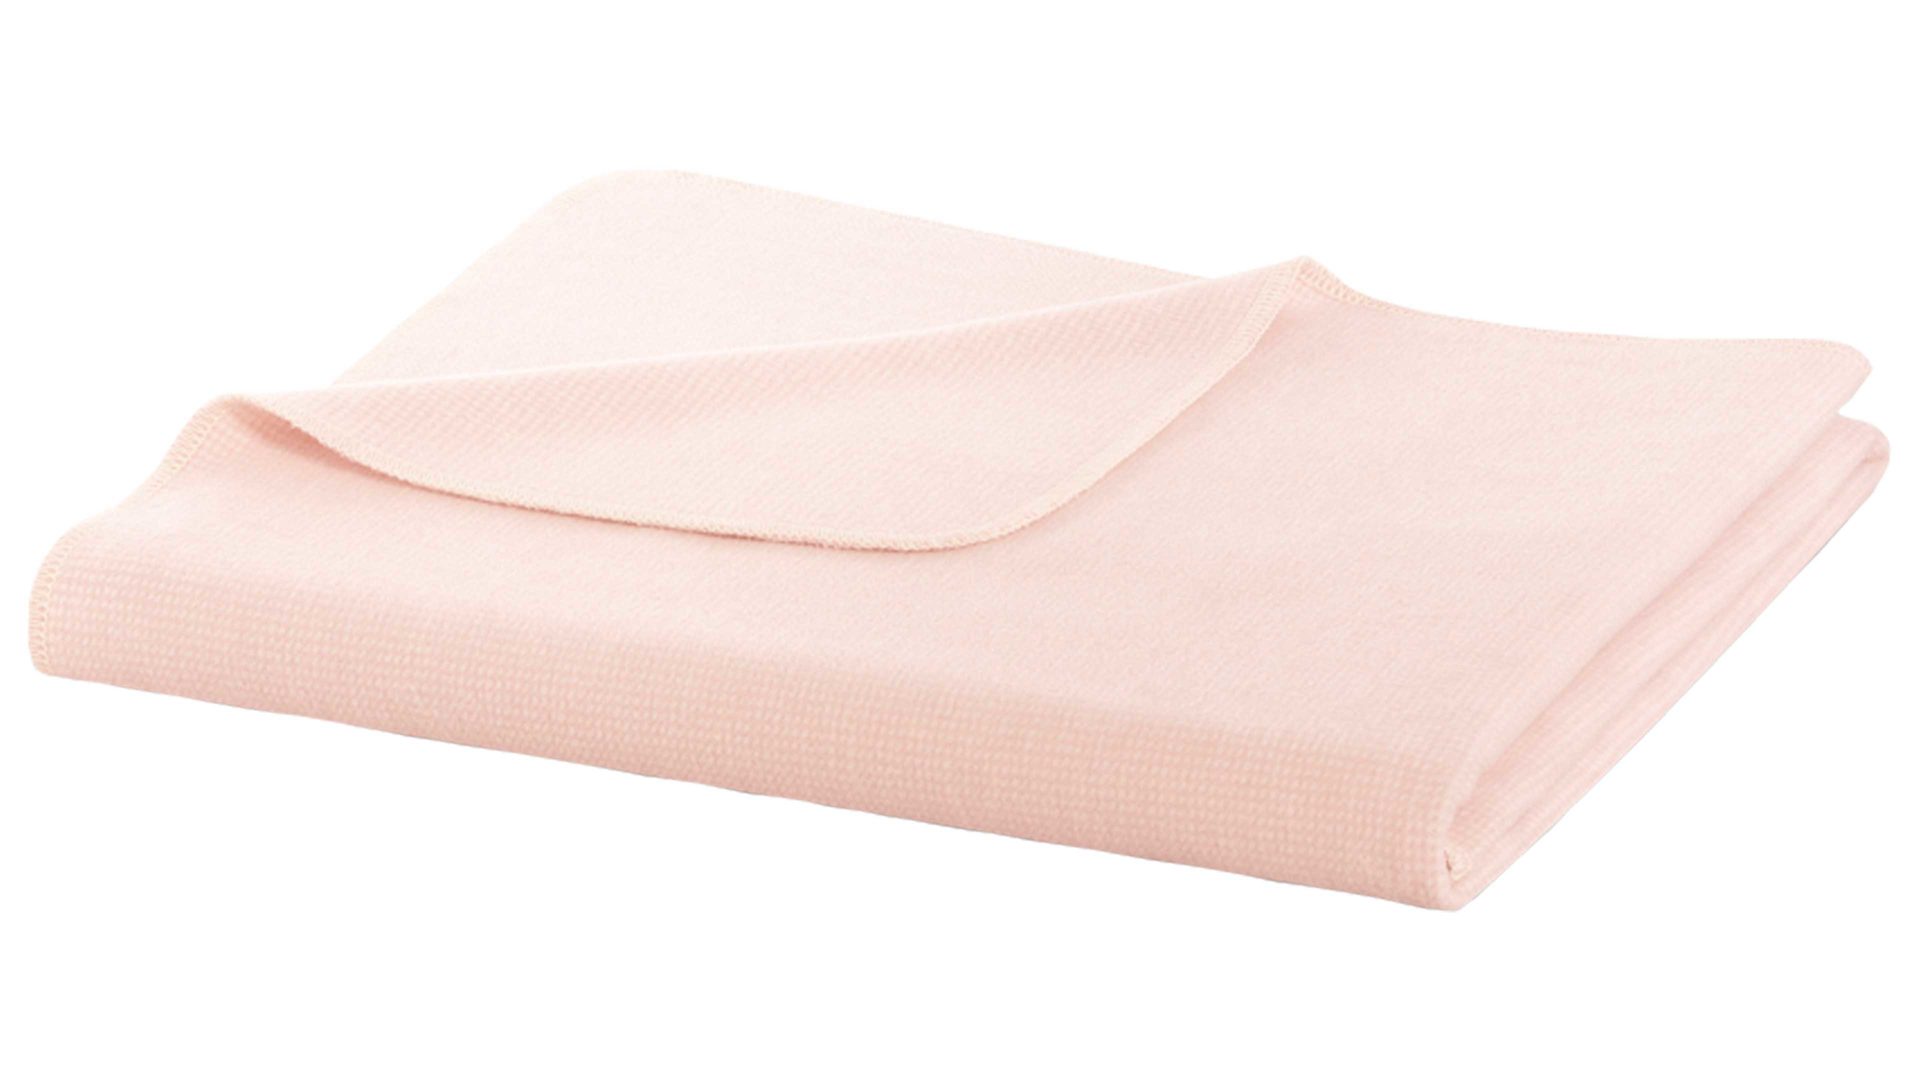 Wohndecke Biederlack® aus Naturfaser in Pink Biederlack® Recycling-Wohndecke Pearl perlroséfarbenes Strukturmuster – ca. 150 x 200 cm